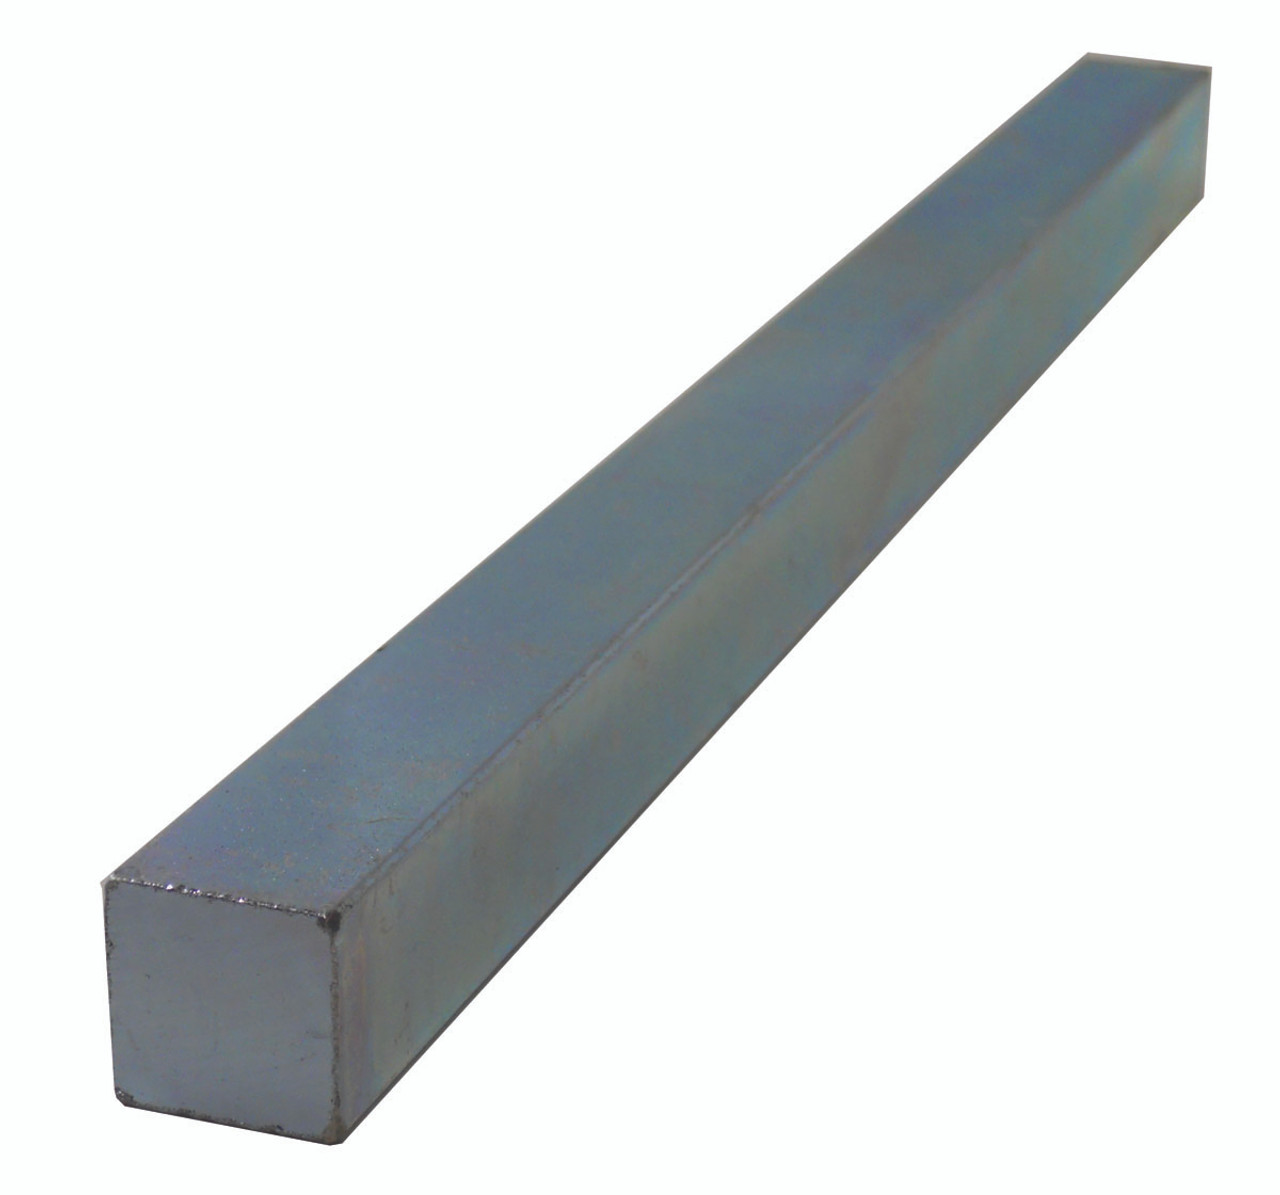 Square SAE 1/8 x 36" Zinc Plated Steel Keystock  .125-36